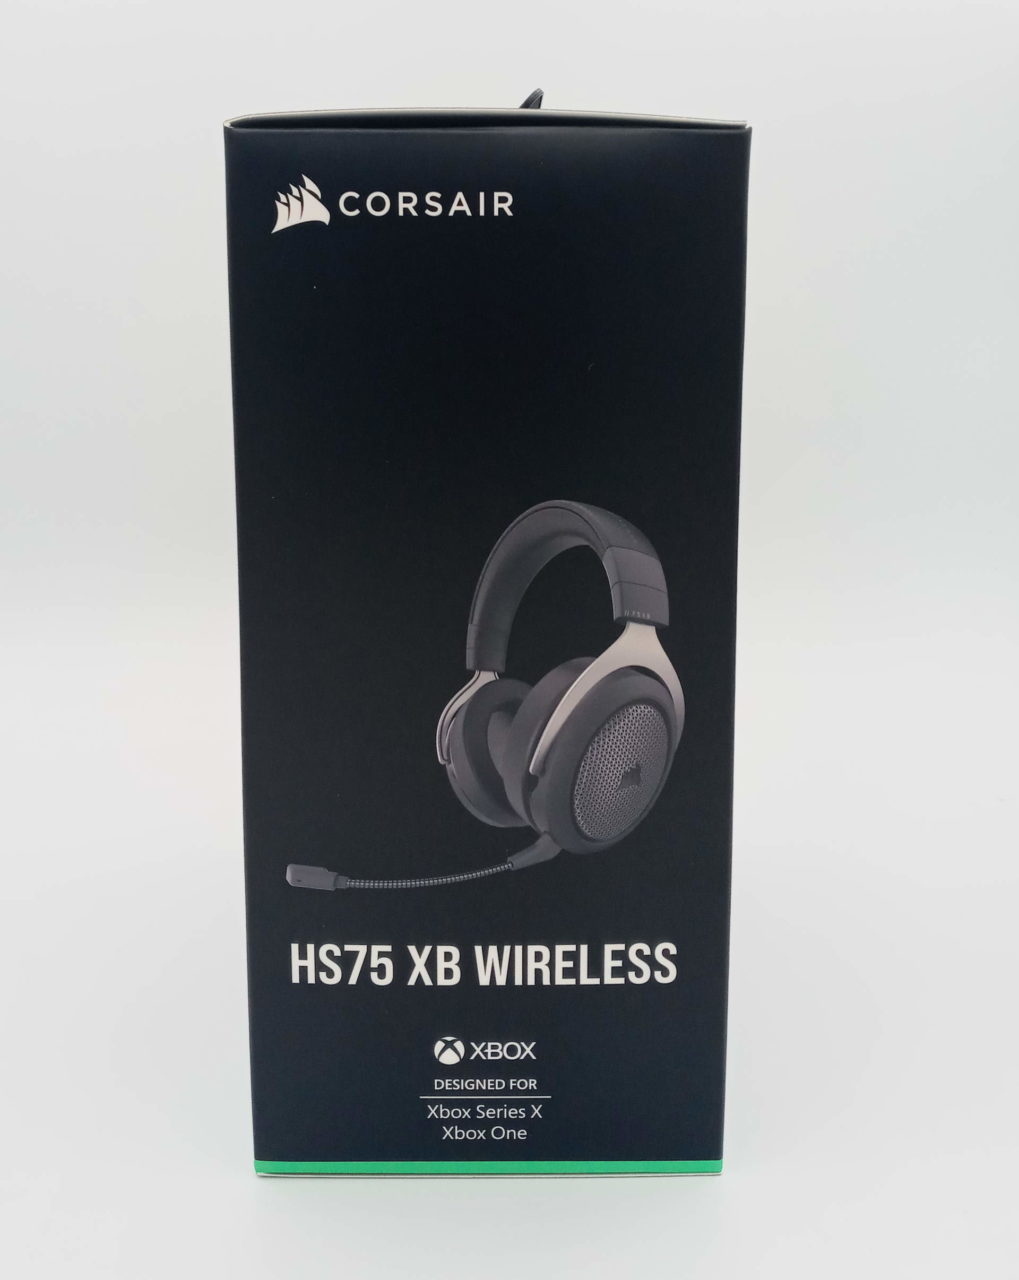 4 Corsair HS75 XB Wireless Review